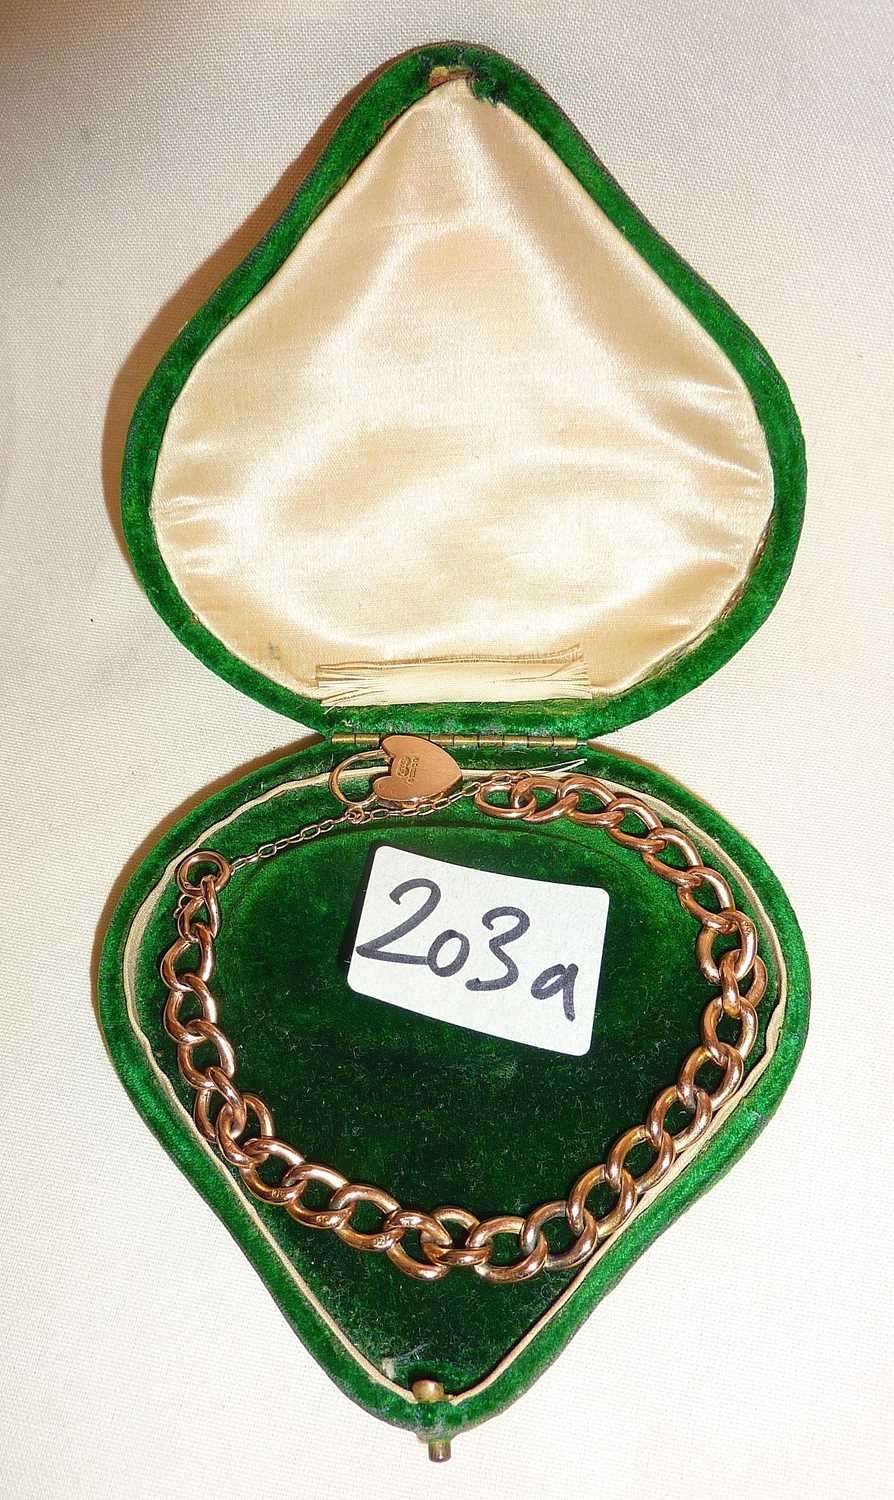 9ct rose gold belcher chain bracelet with padlock clasp in velvet case, approx. 8.5g